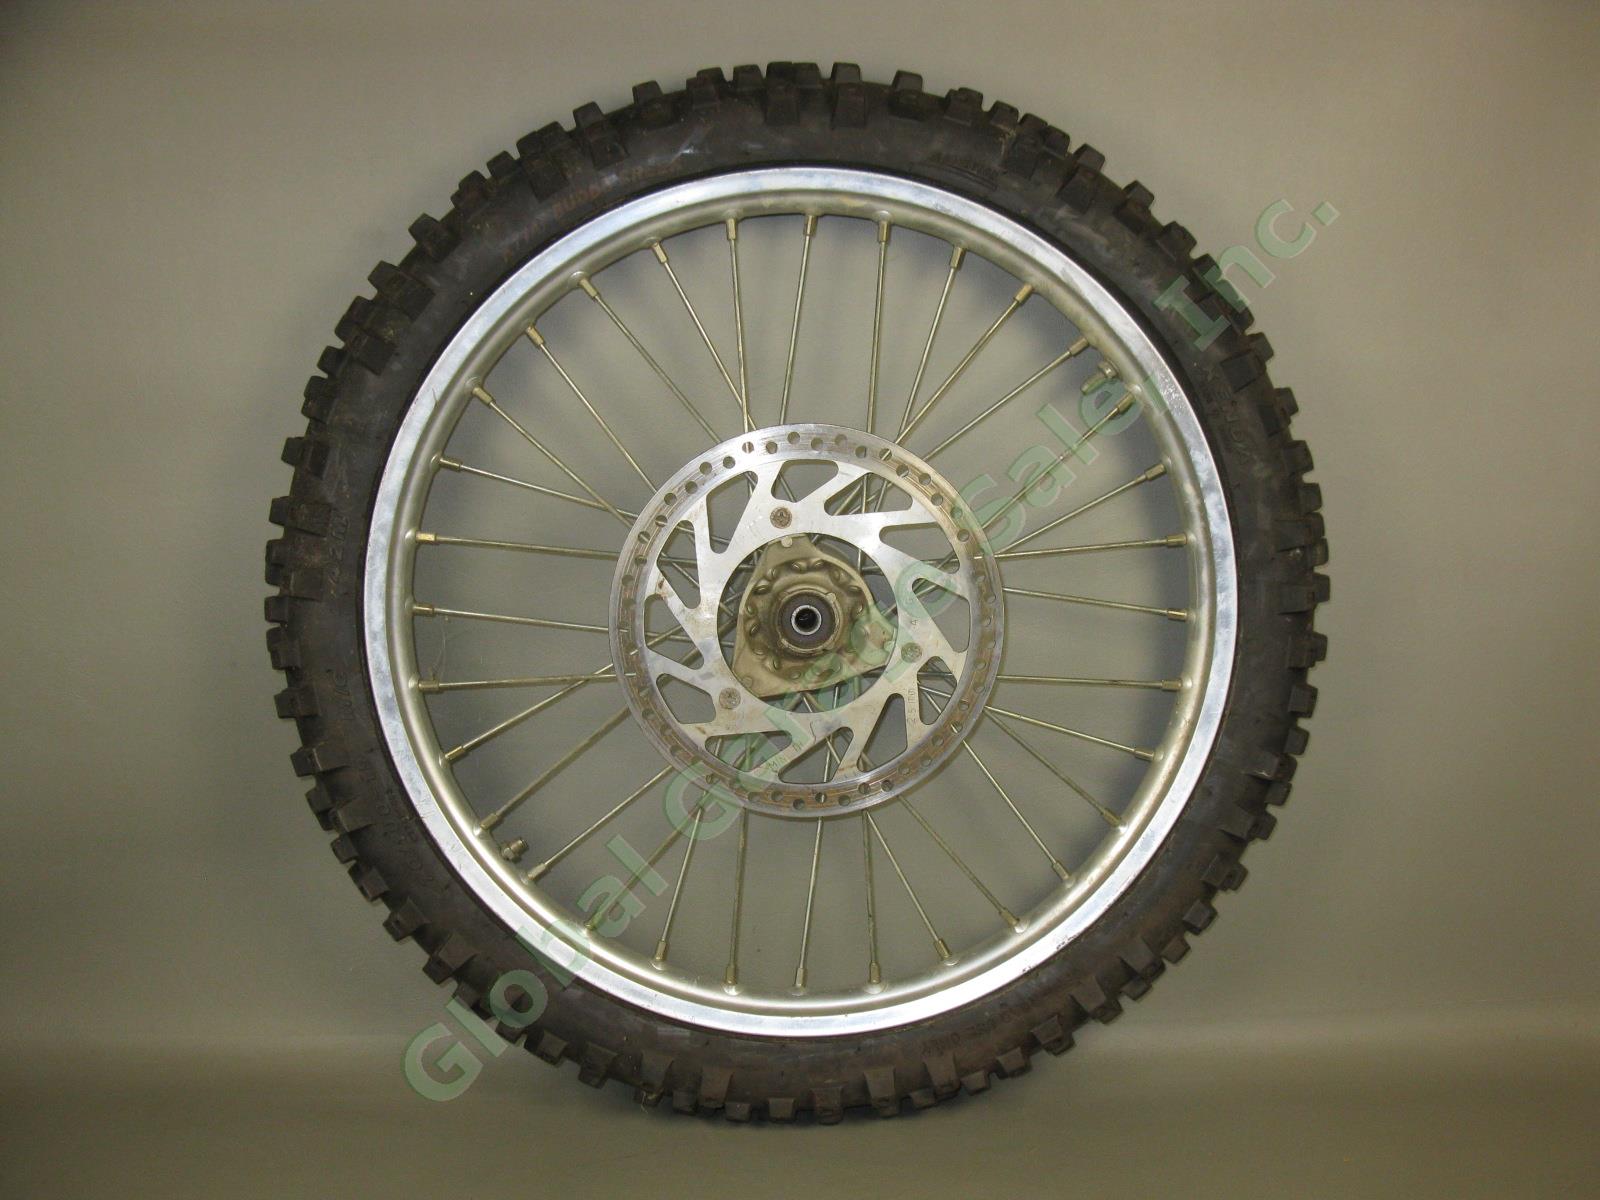 Talon Excel Takasago YZ85 Big Wheel J 19x1.40 Front Rim Kenda 70/100-19 M/C Tire